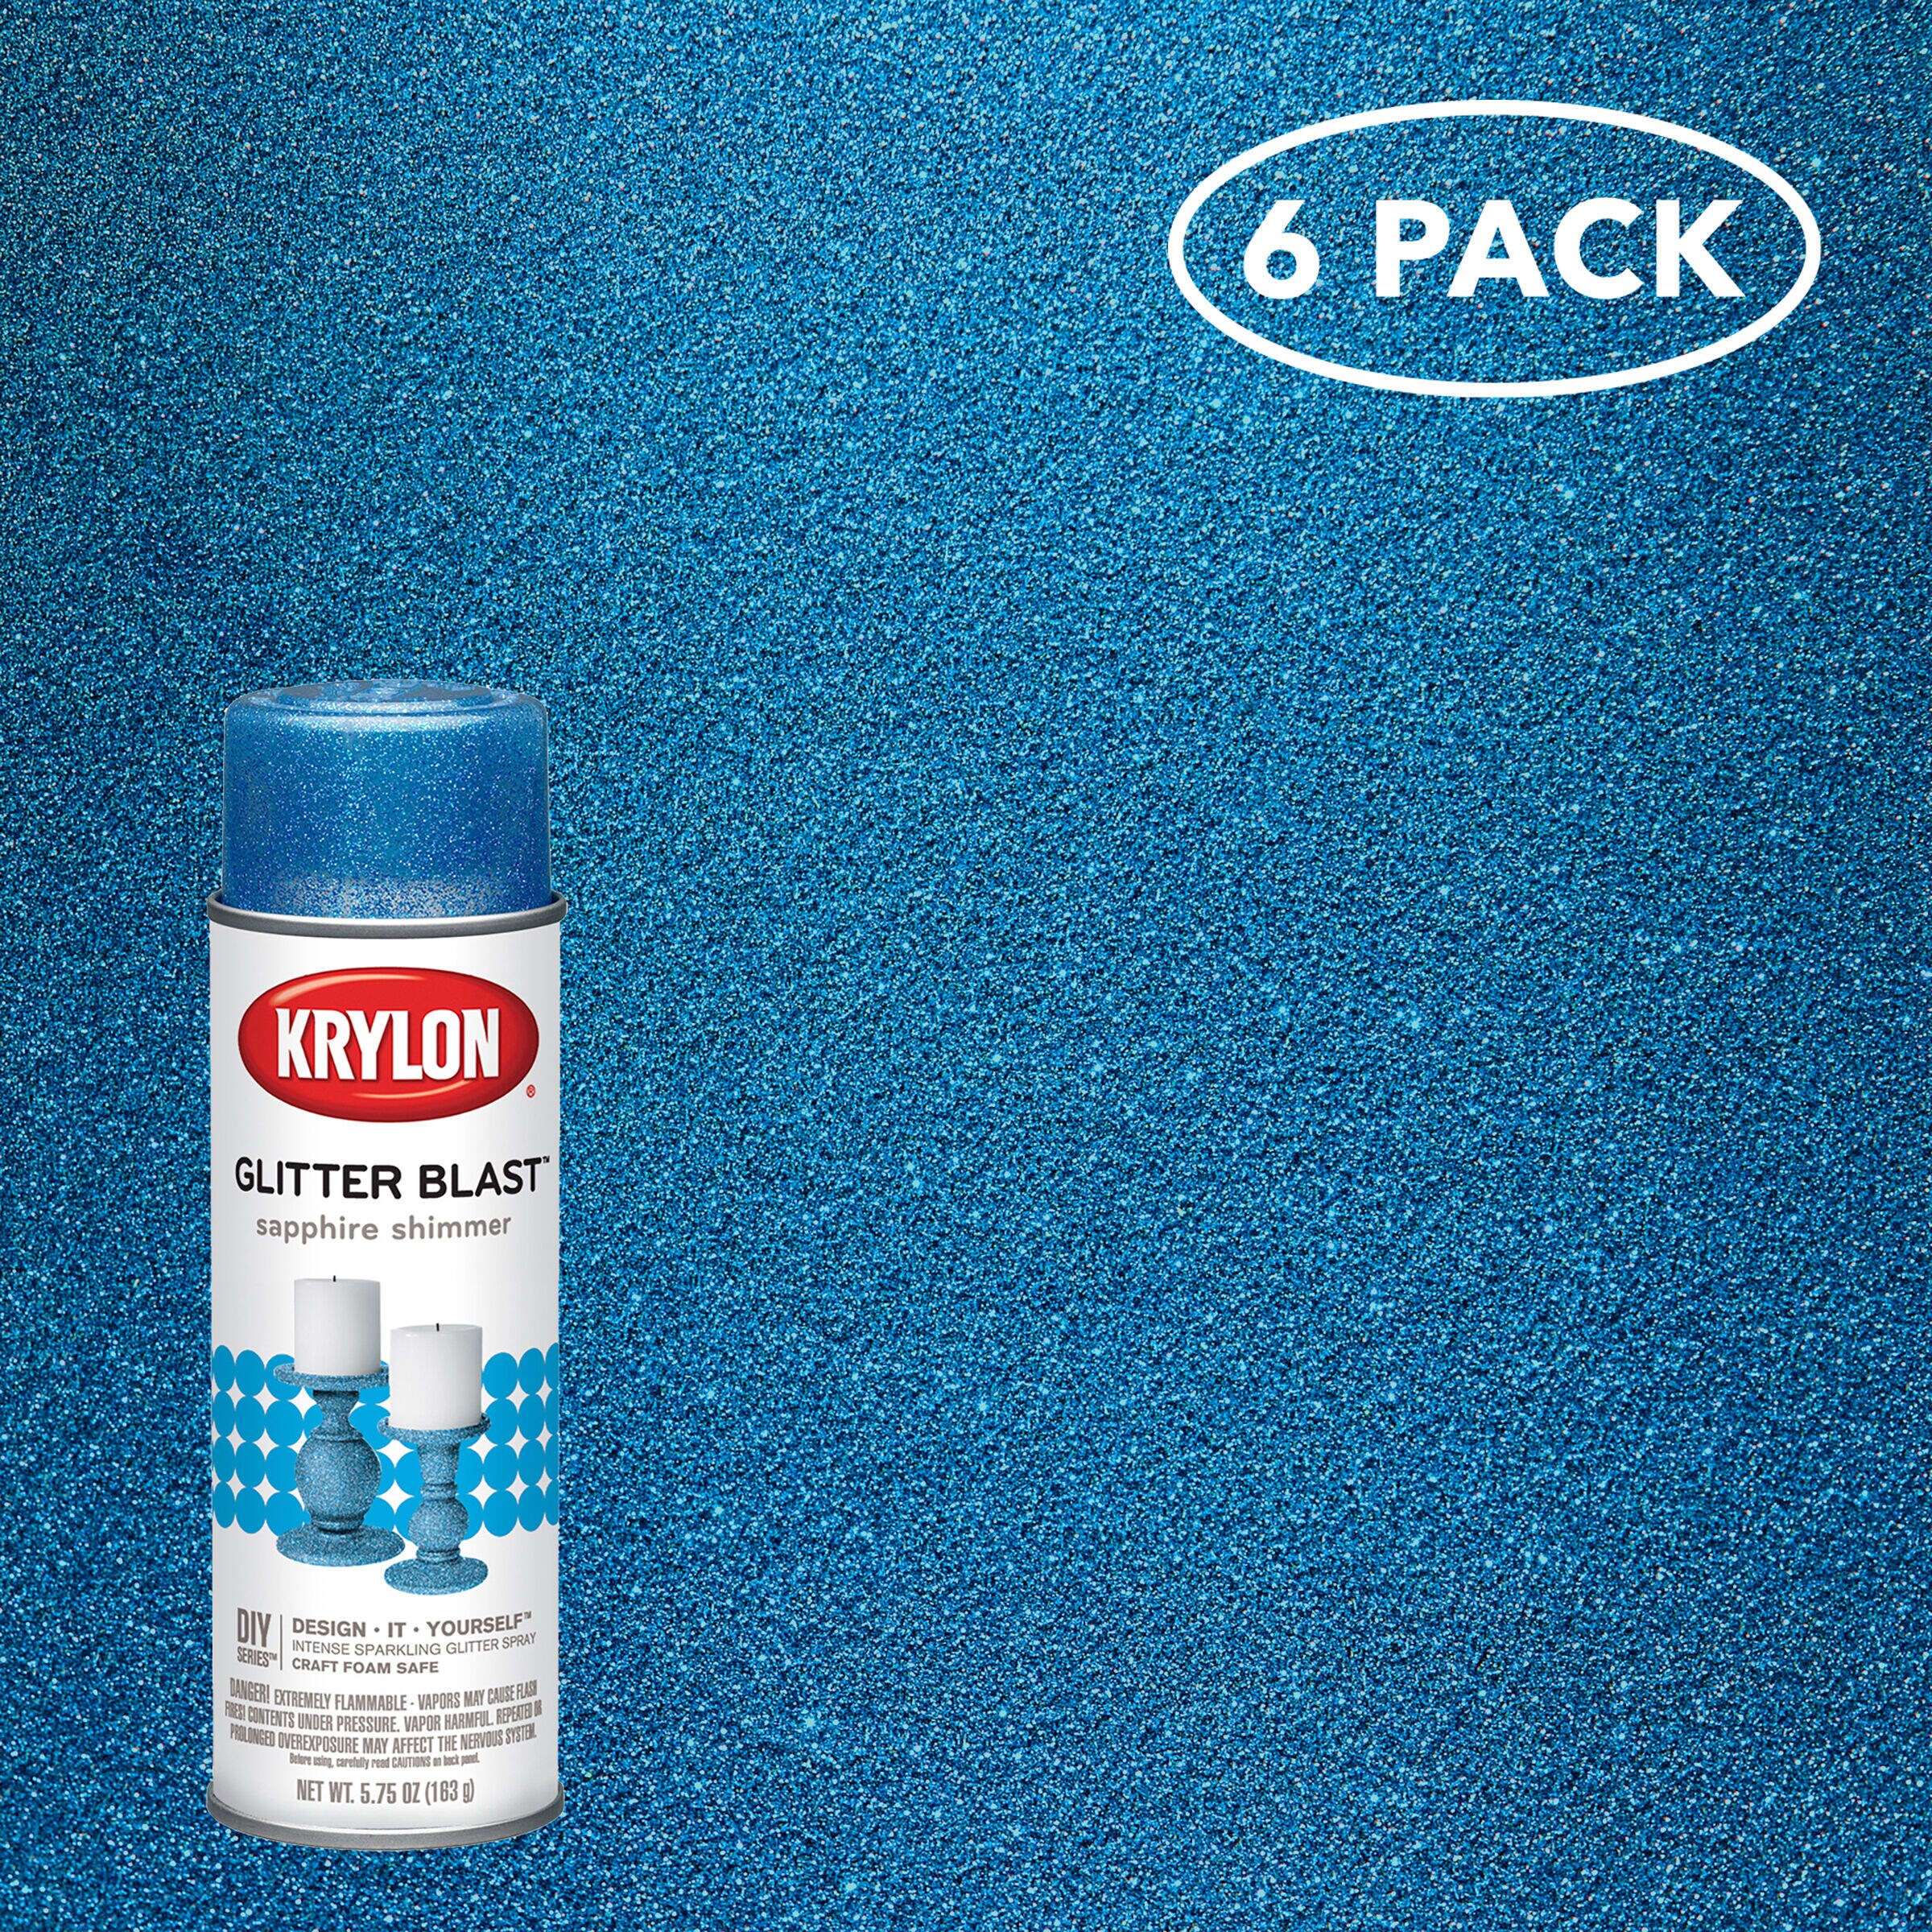 Krylon Glitter Blast Glitter Spray Paint, 5.7 oz., Citrus Dream 